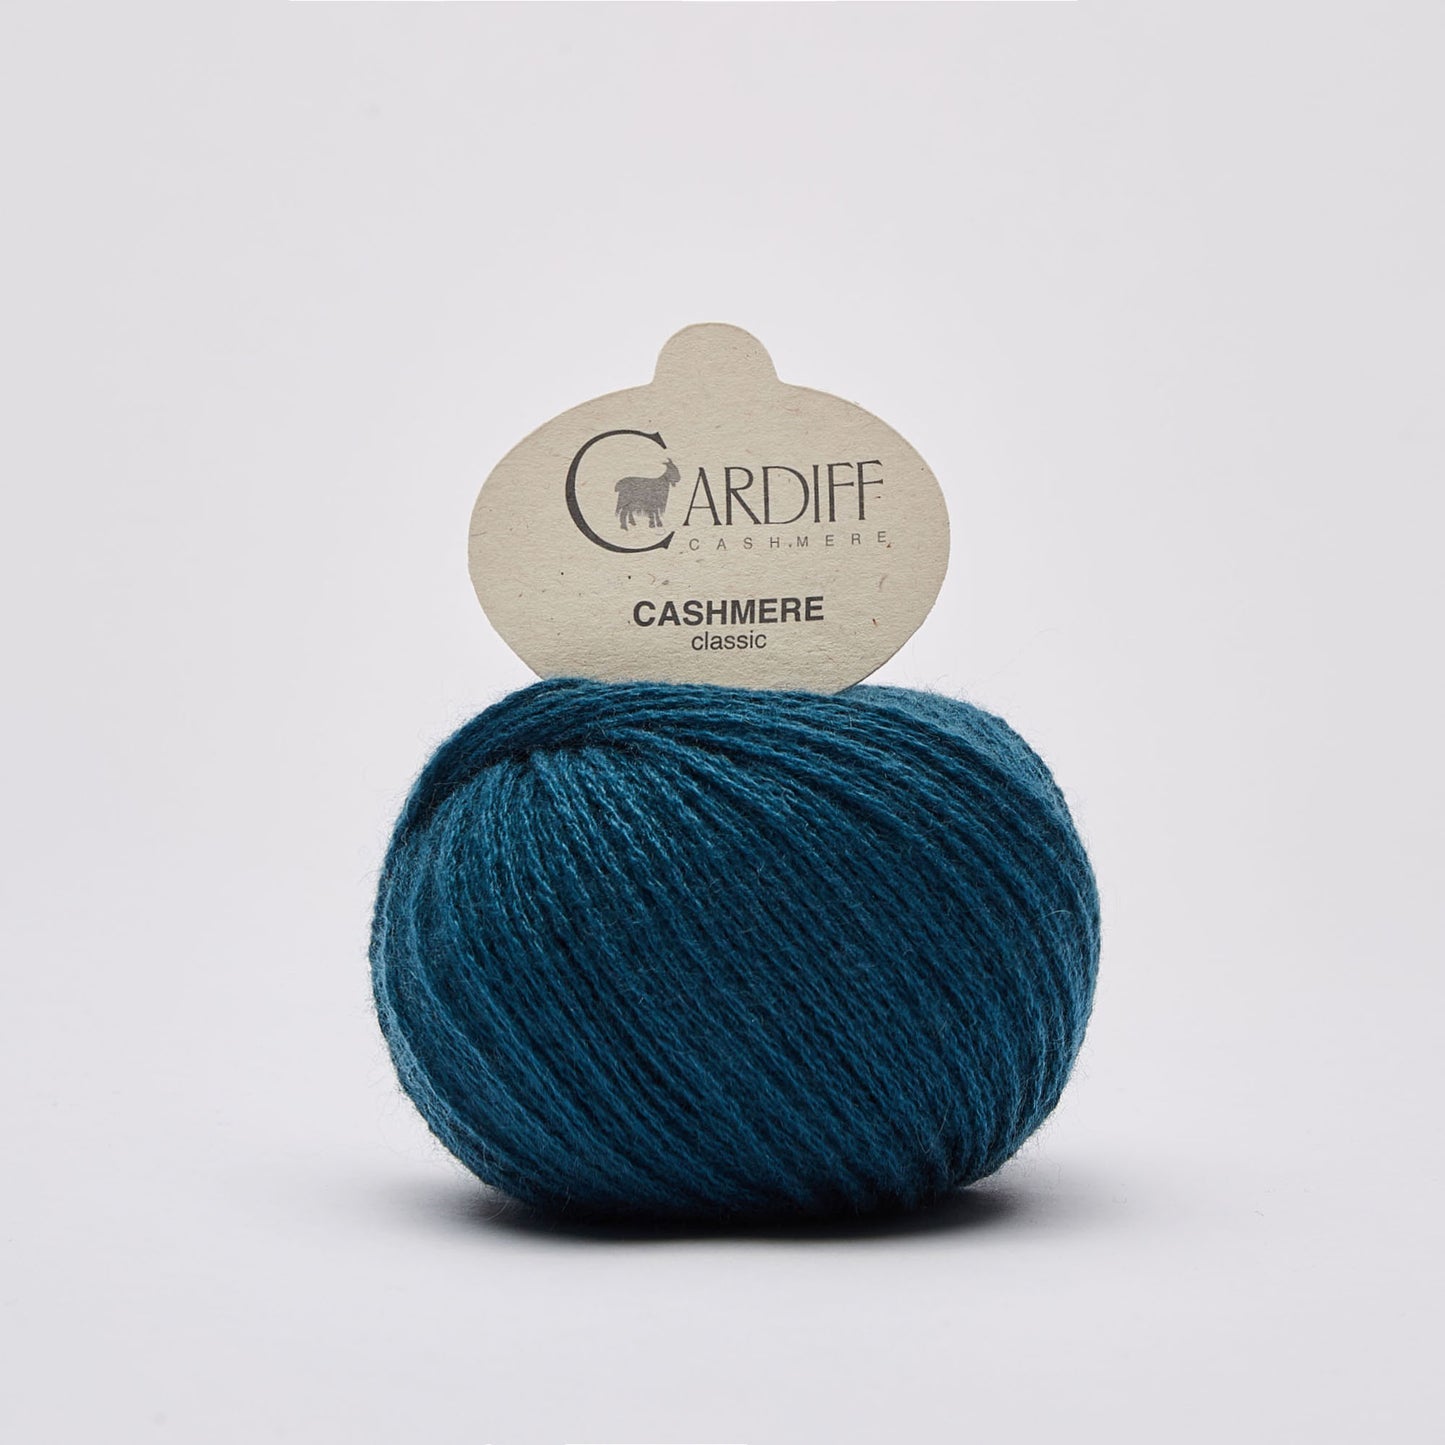 Cardiff CLASSIC gentle yarn, 649, OTTOMAN, comp: 100% Cashmere